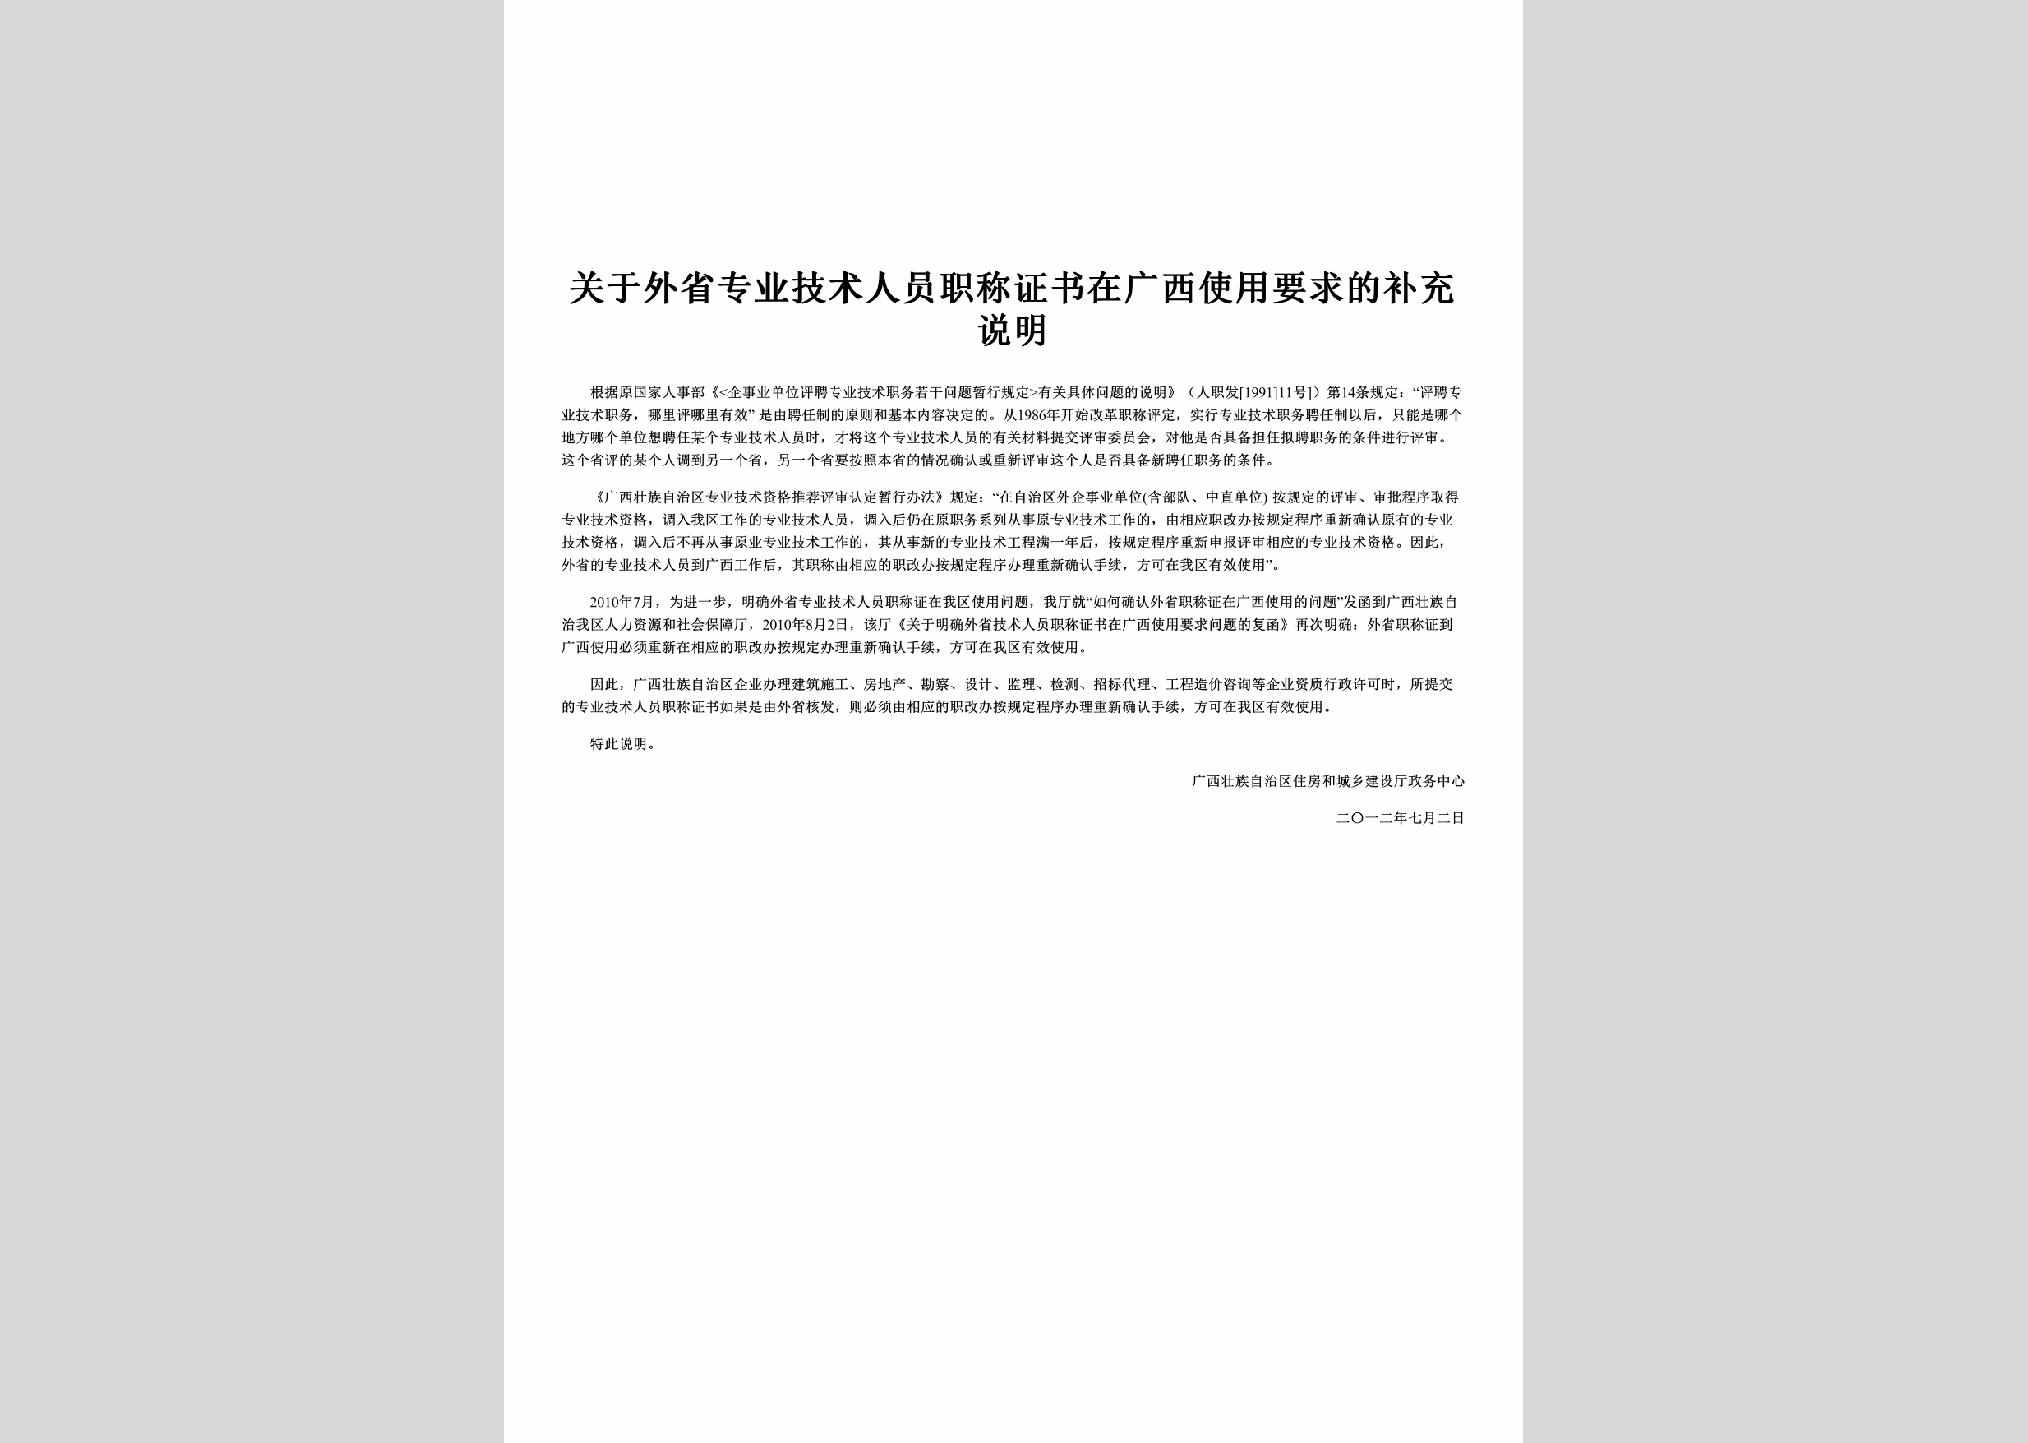 GX-JSRYYQSM-2012：关于外省专业技术人员职称证书在广西使用要求的补充说明